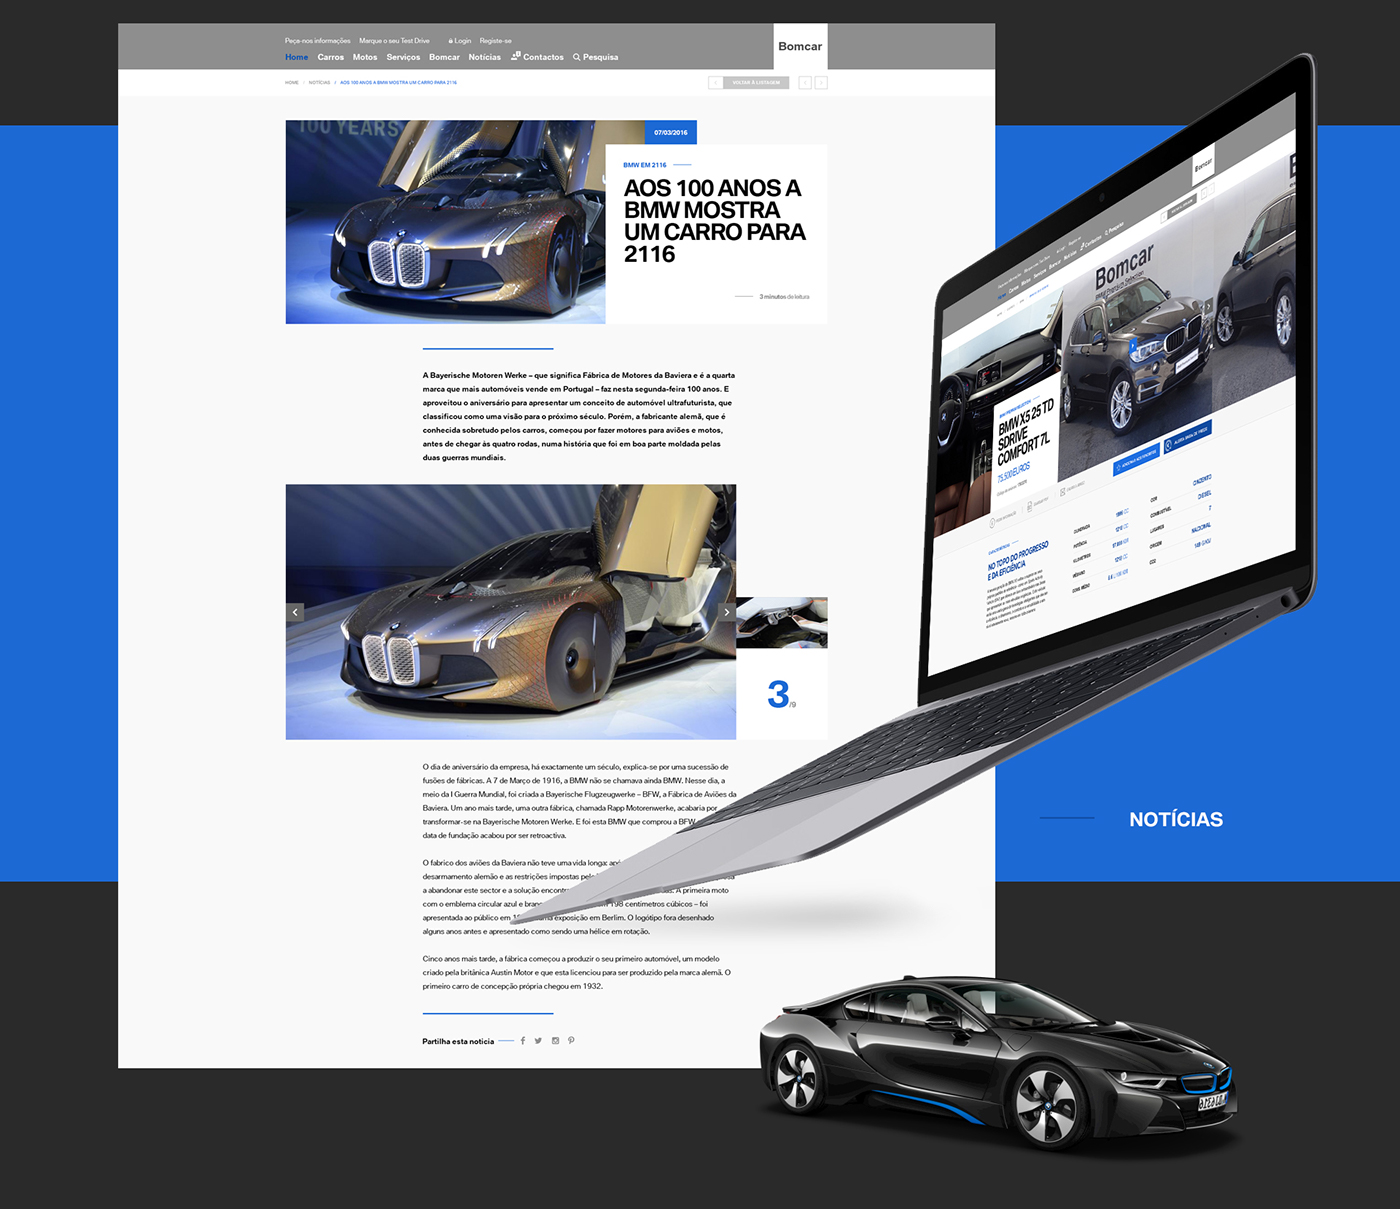 BMW Stand MINI Webdesign Responsive Cars